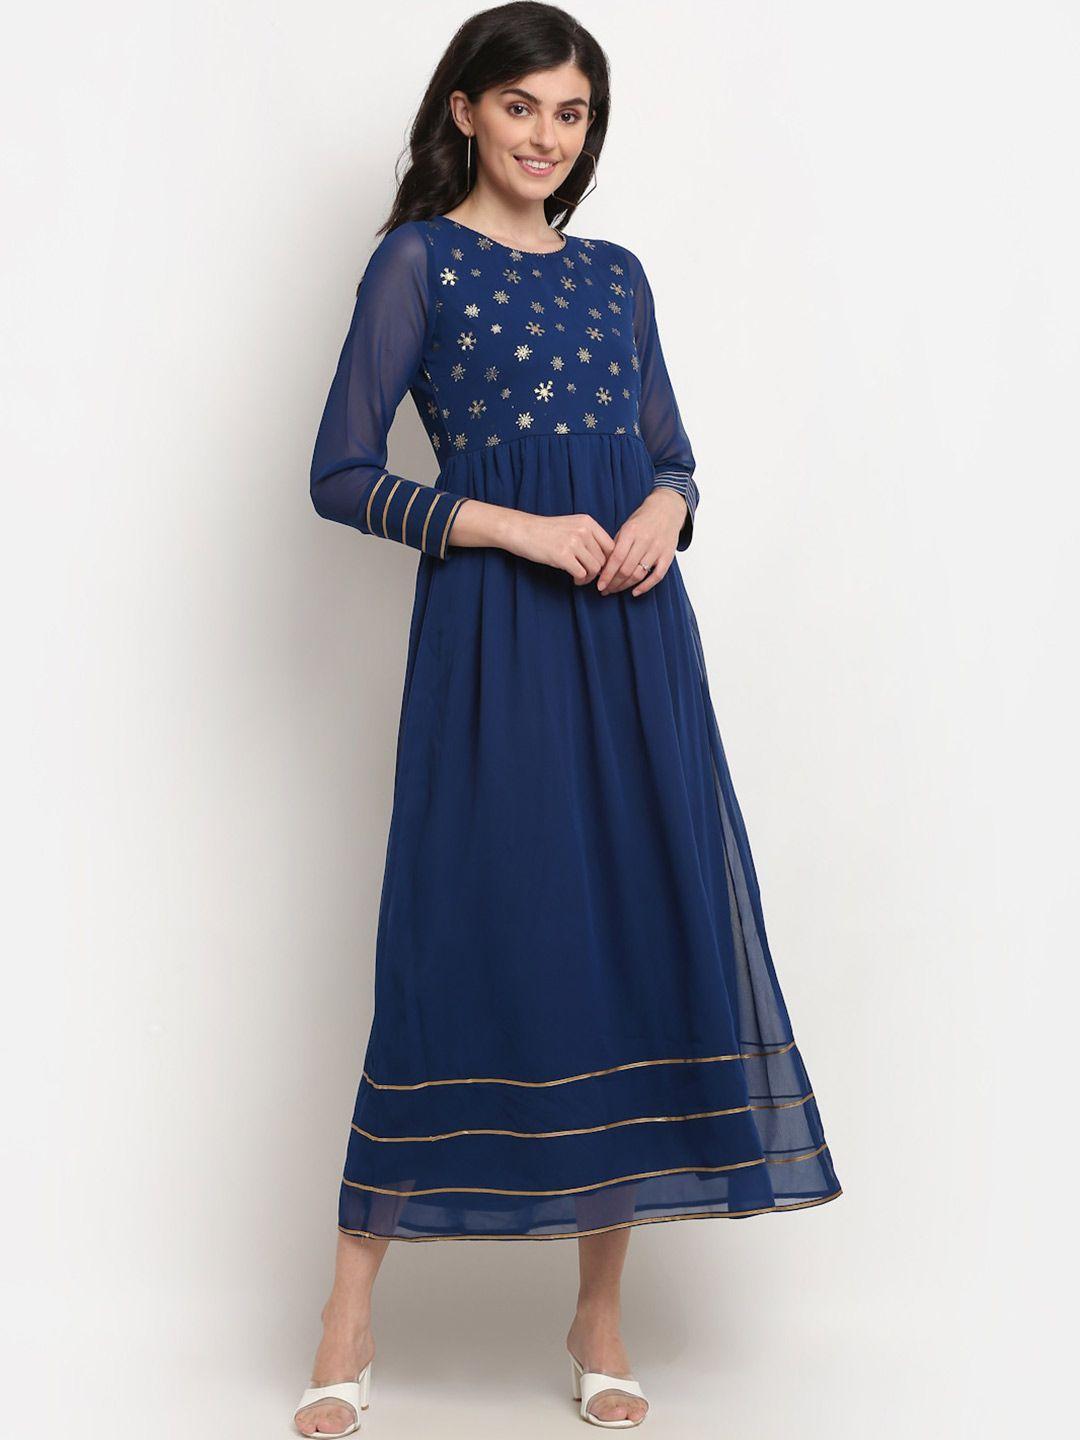 la-zoire-navy-blue-&-gold-toned-ethnic-motifs-foil-printed-ethnic-midi-fit-&-flare-dress